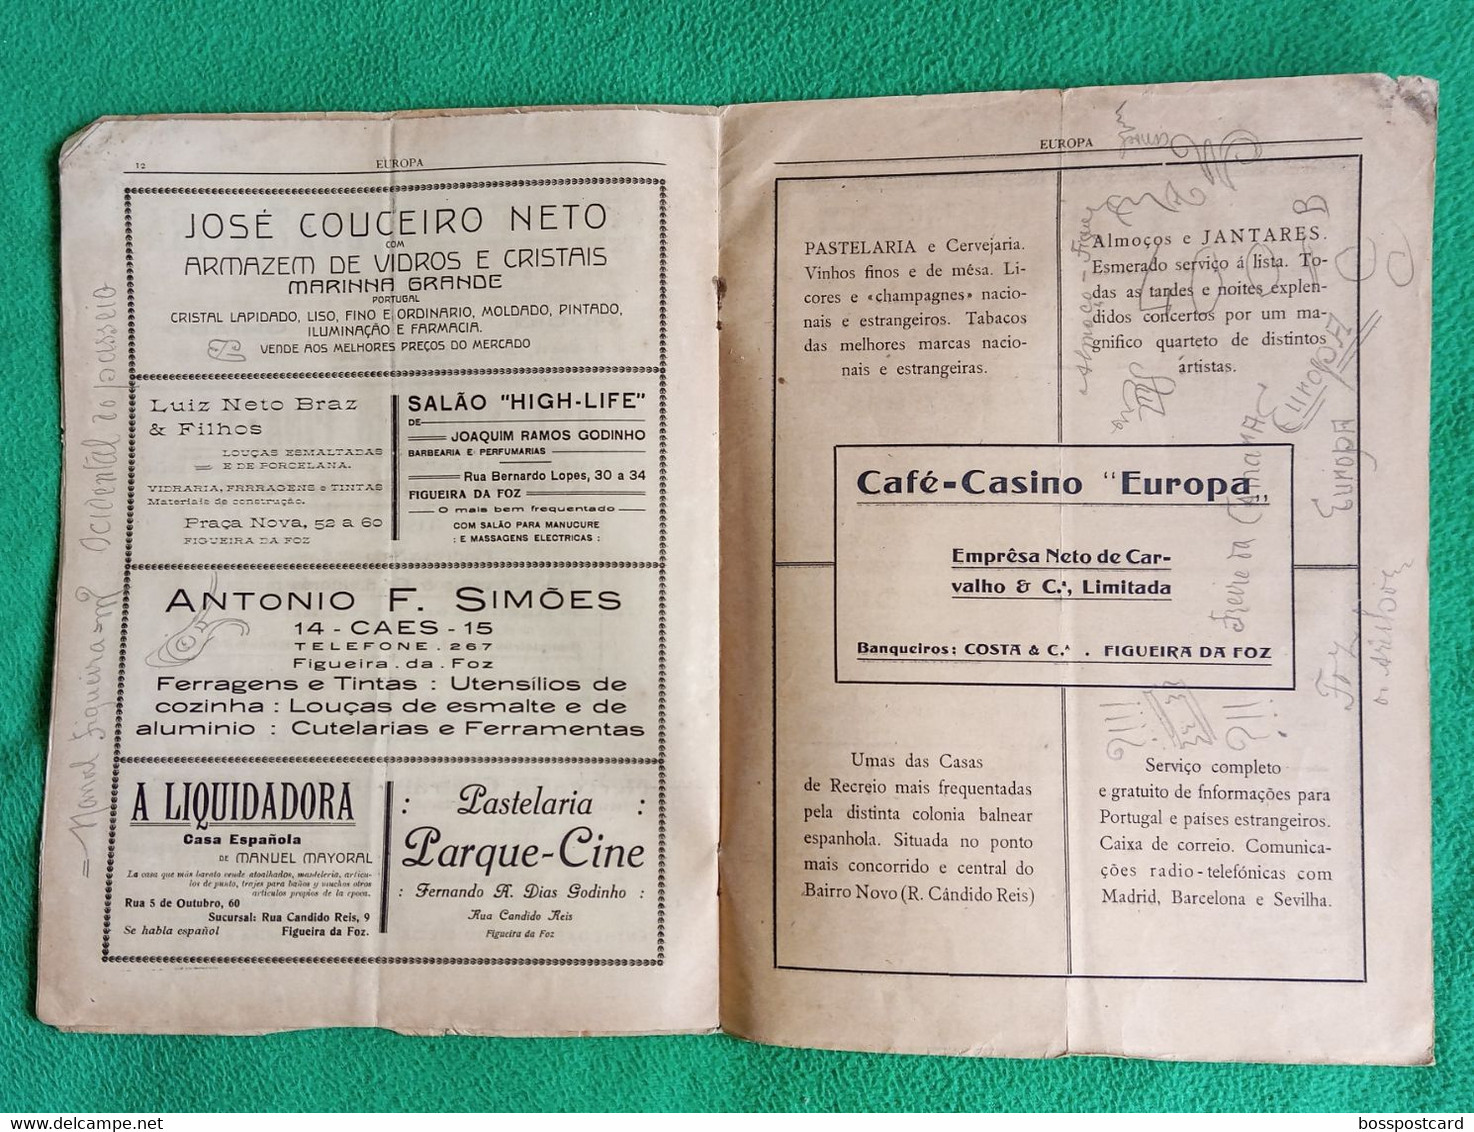 Figueira da Foz - Revista "Europa" Nº 3 de 15 de Maio de 1925 - Publicidade - Comercial. Coimbra. Portugal.